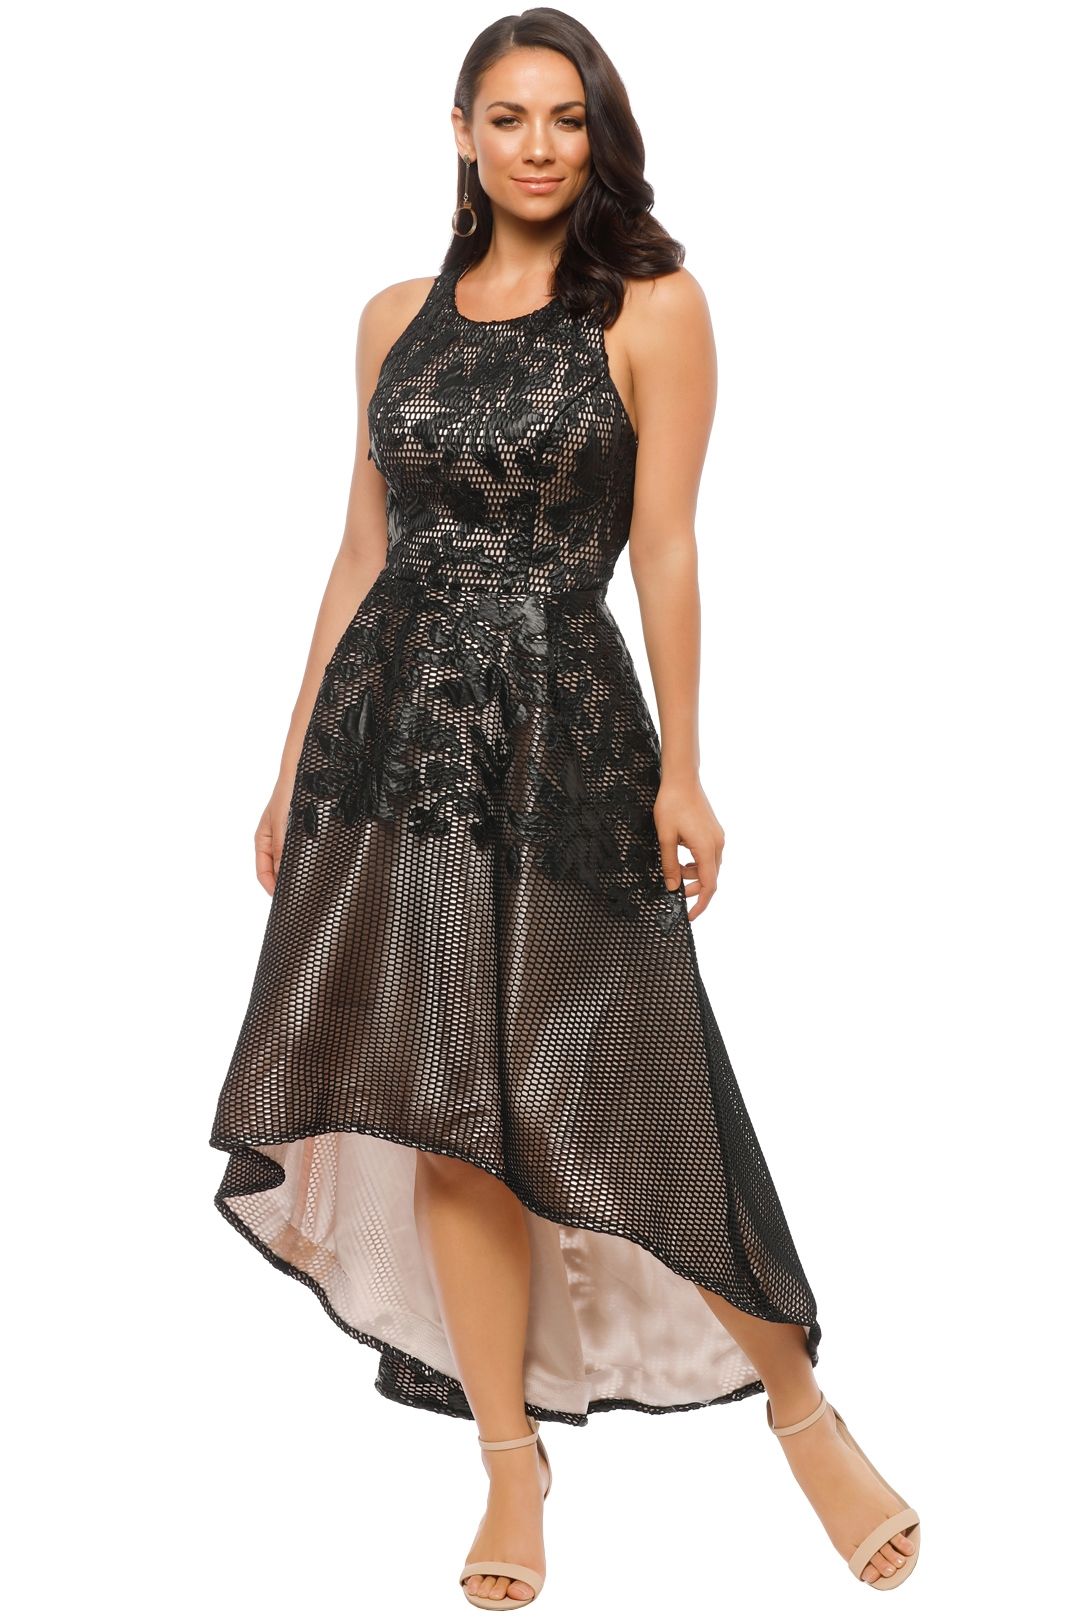 Tinaholy - Floral Lace Dress - Black - Front